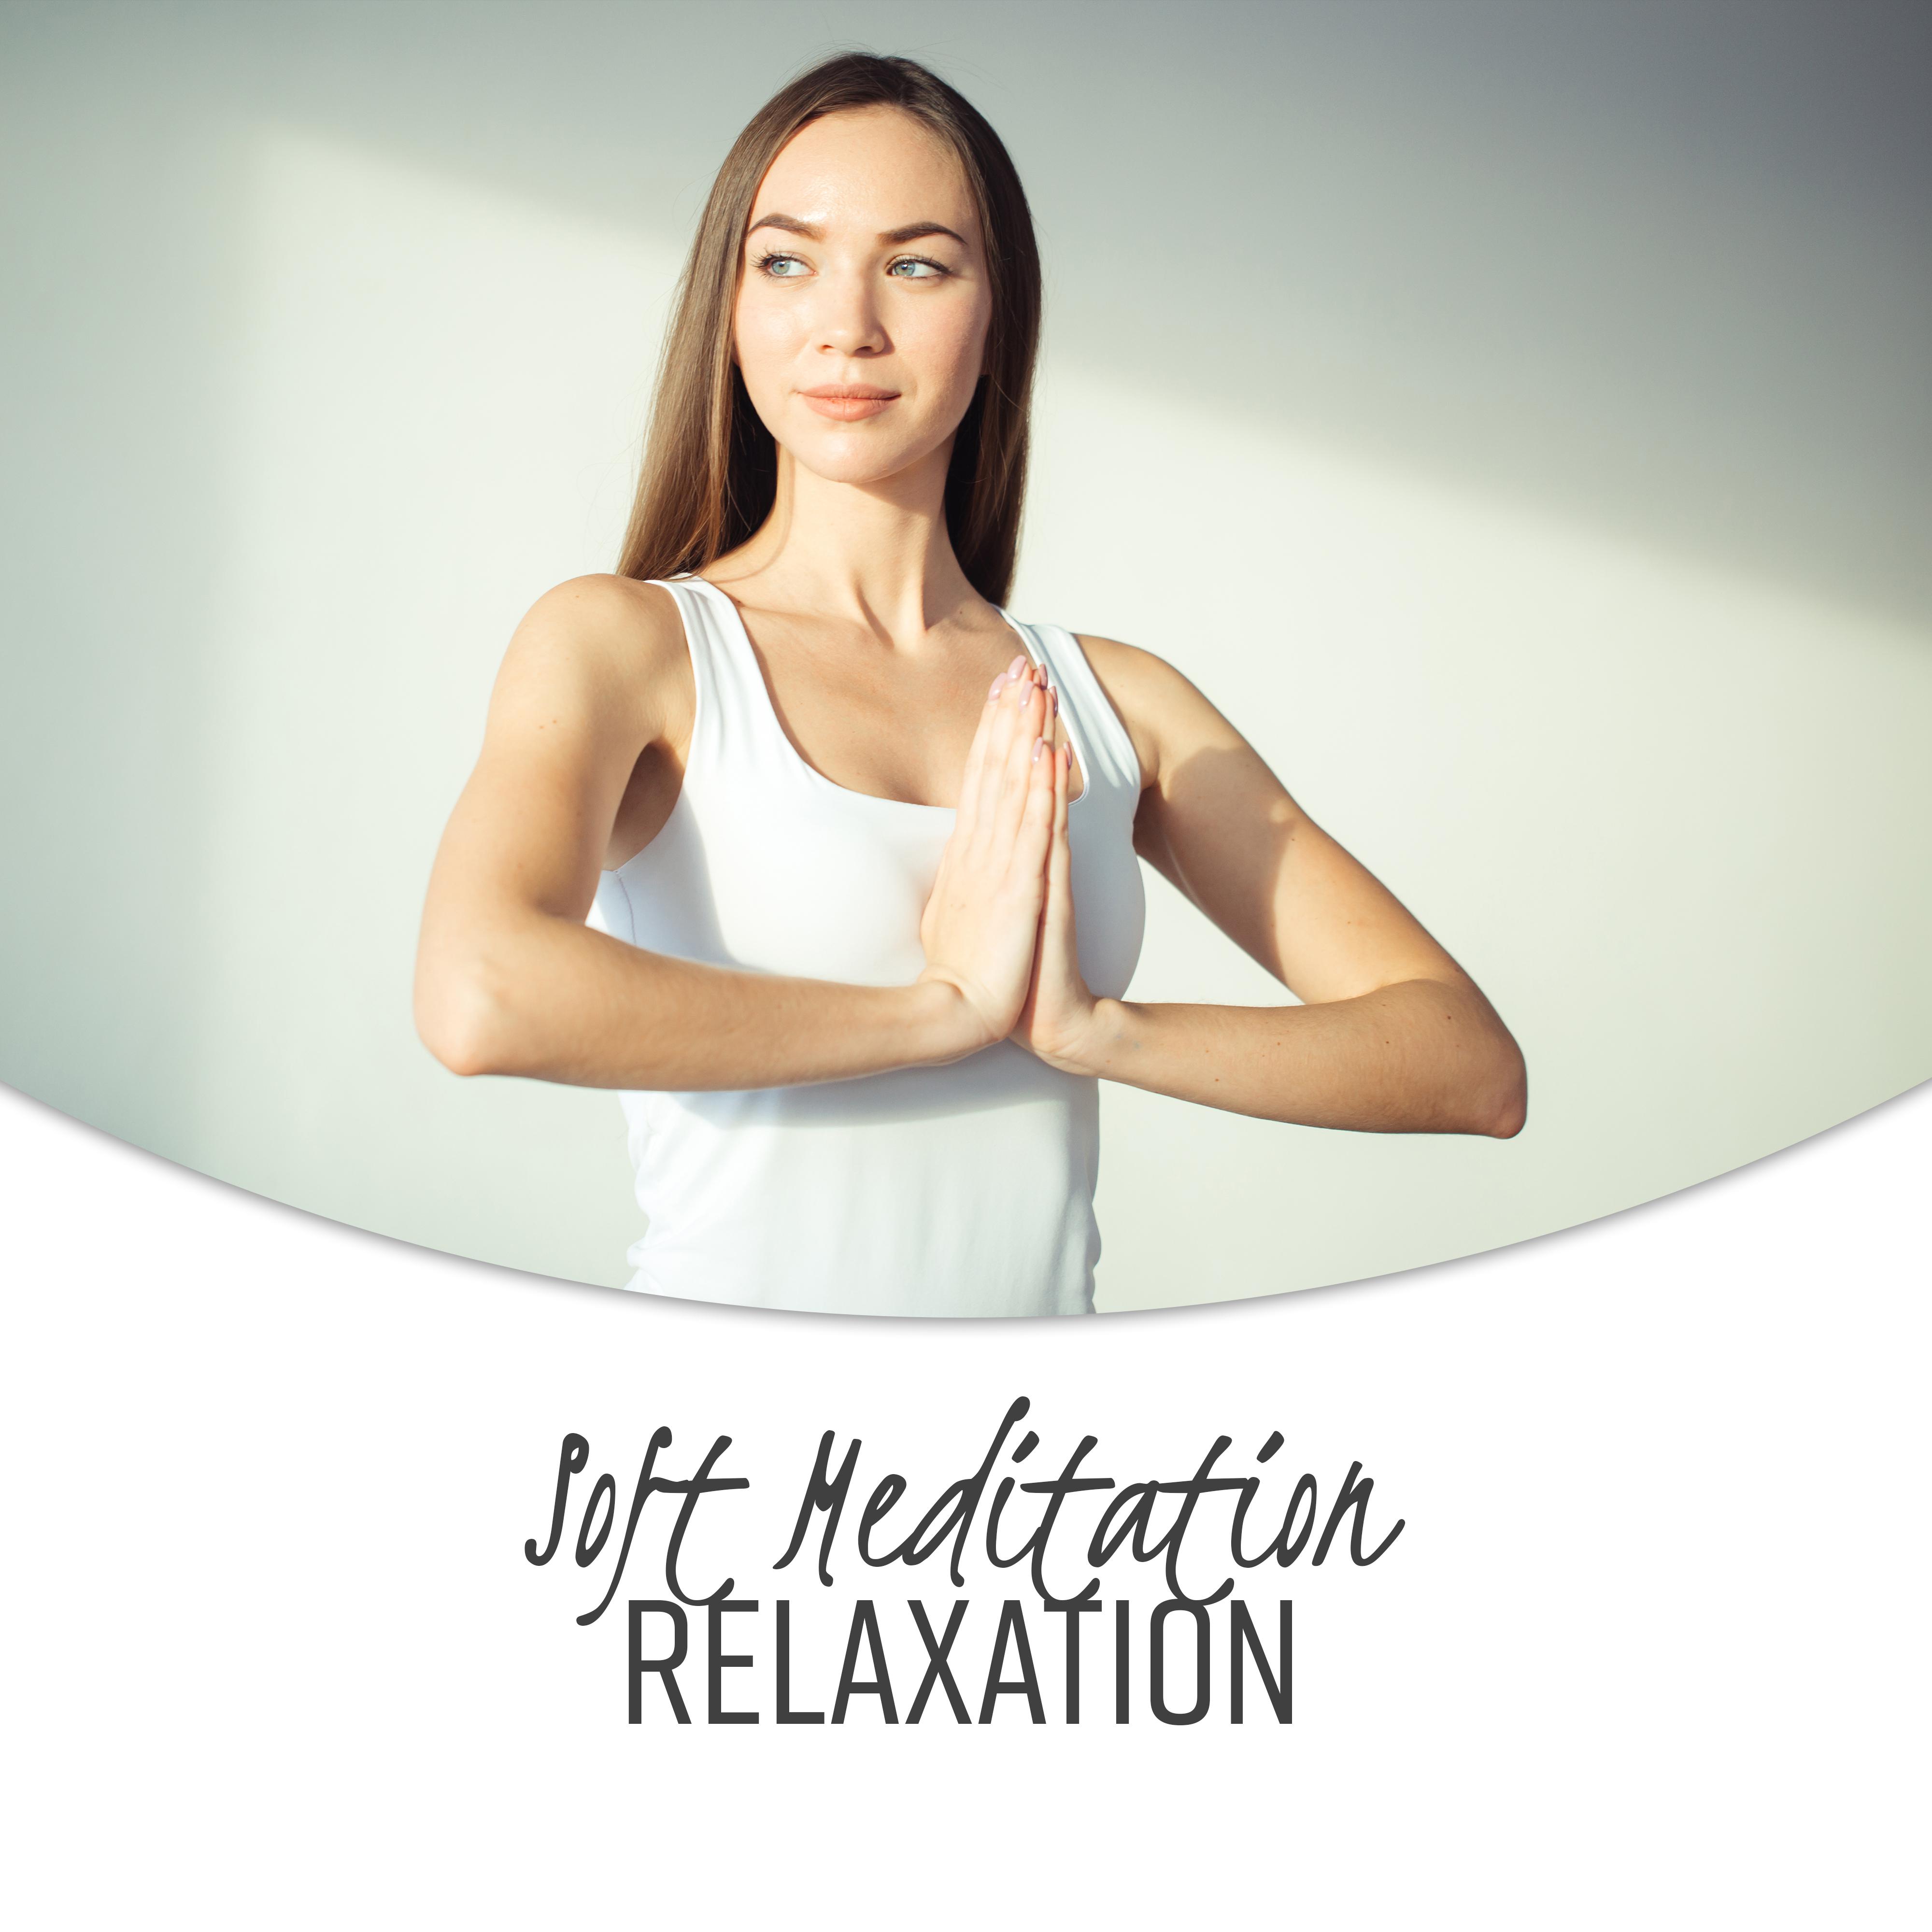 Soft Meditation Relaxation